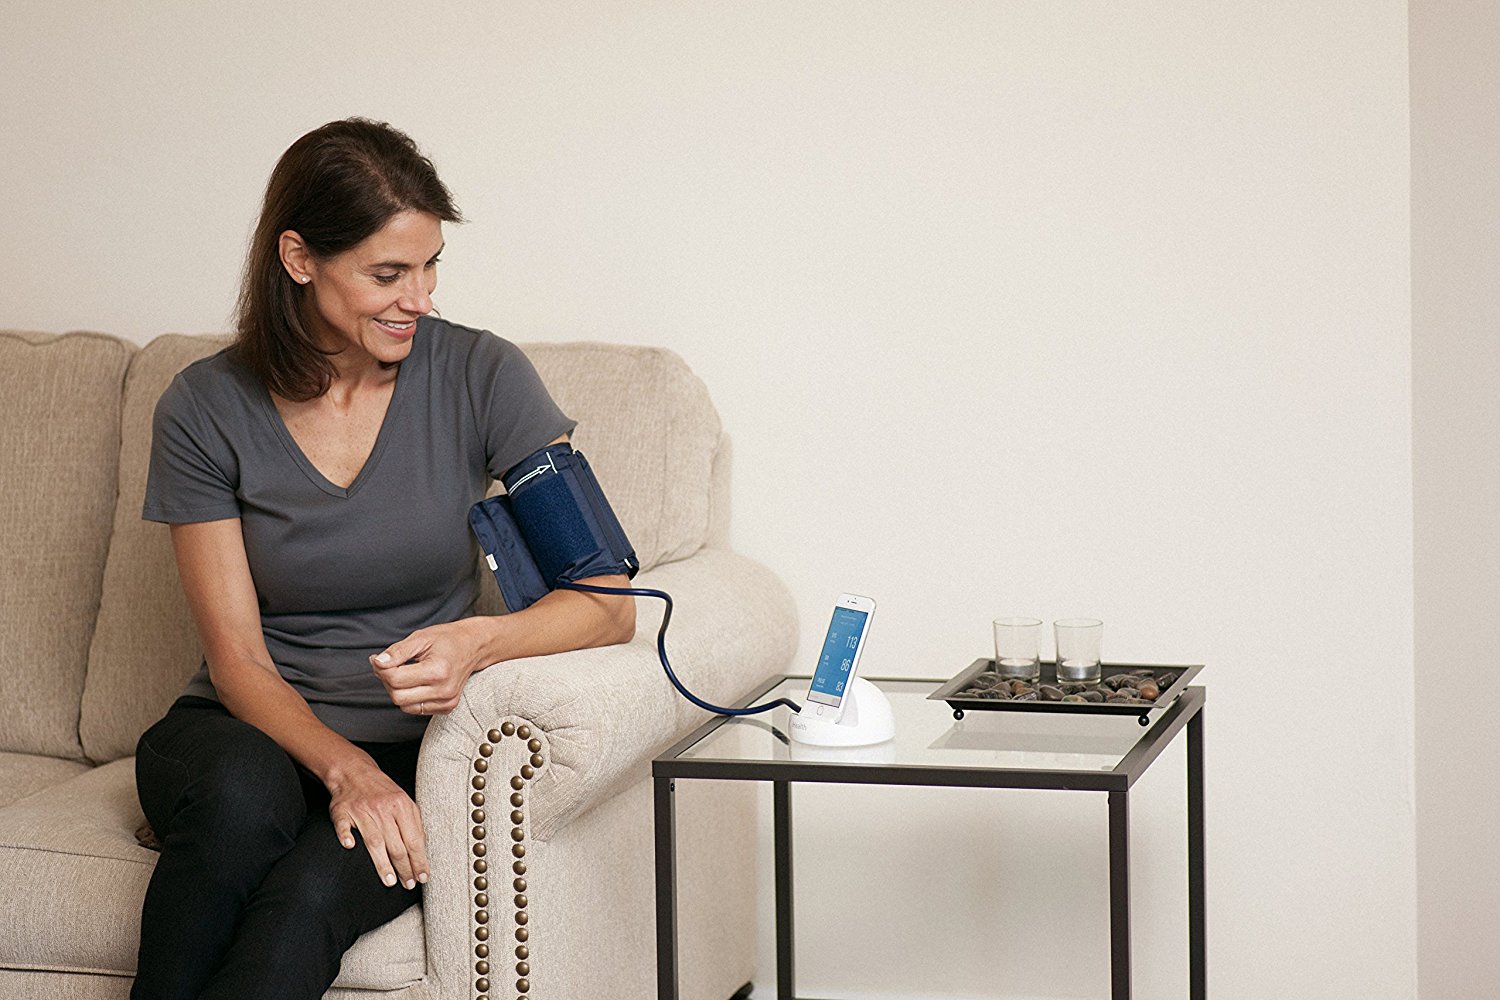 iHealth Ease Wireless Upper Arm Blood Pressure Monitor